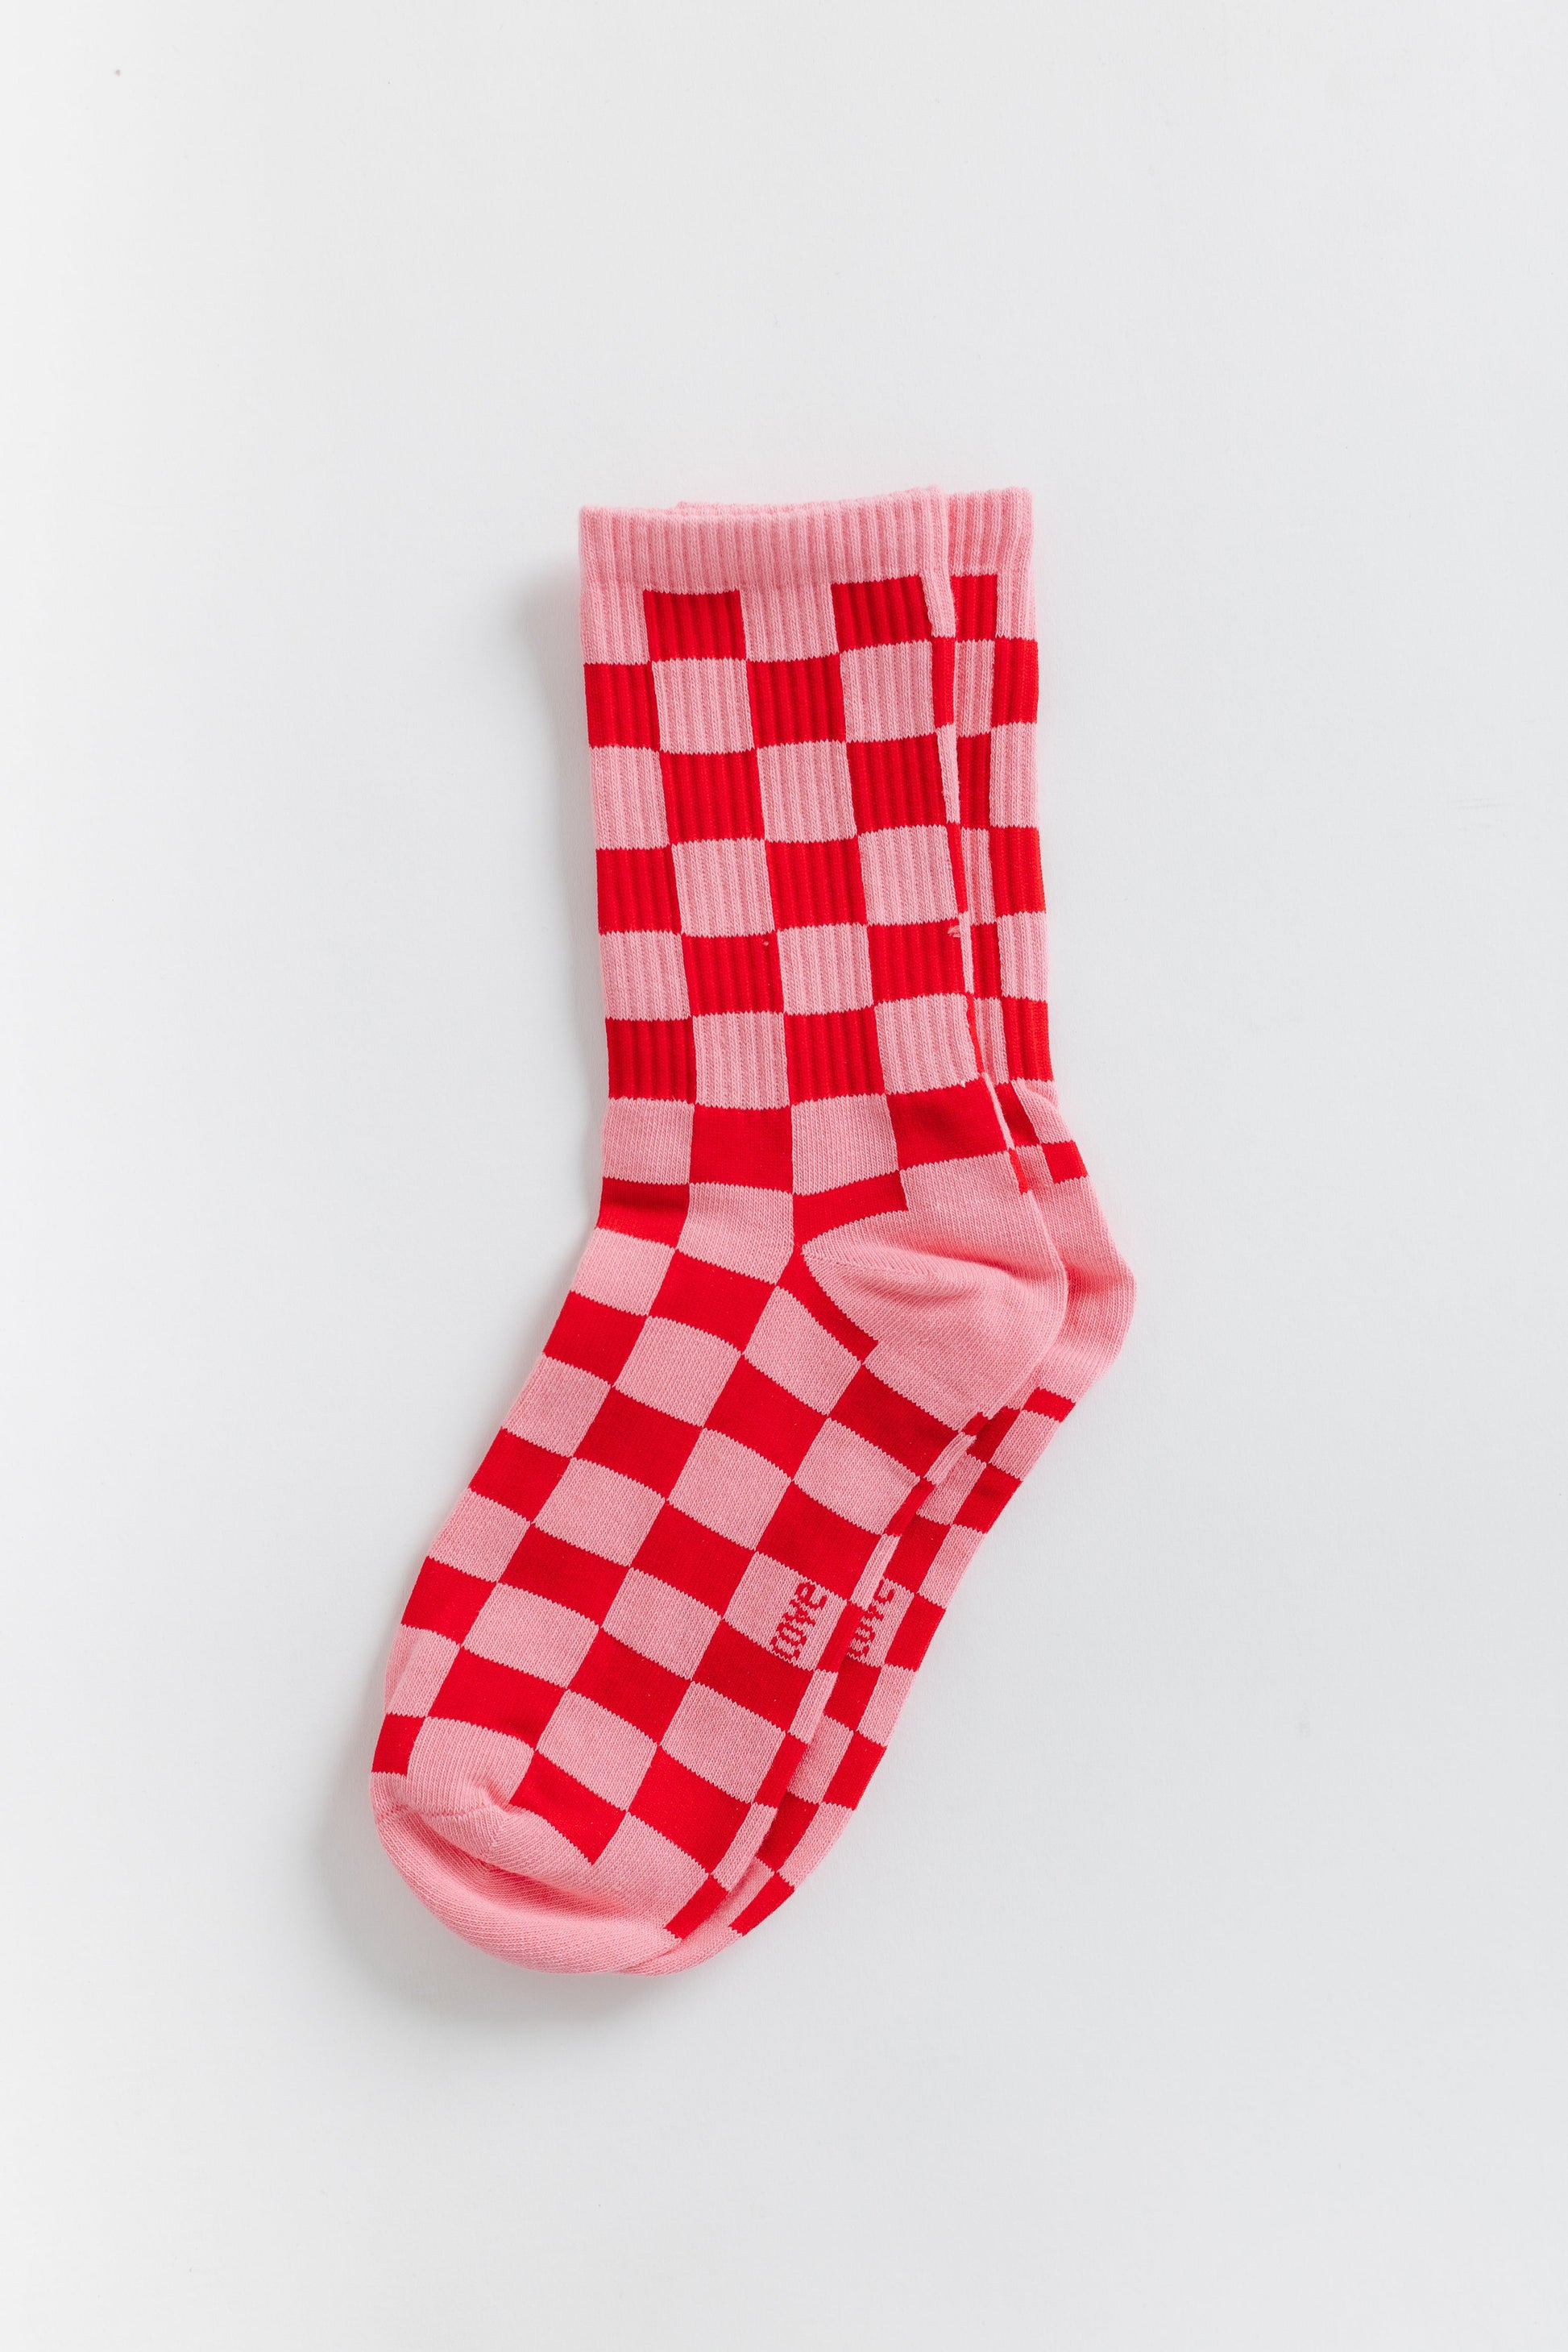 Cove Checker Retro Socks WOMEN'S SOCKS Cove Accessories Pink/Red OS 